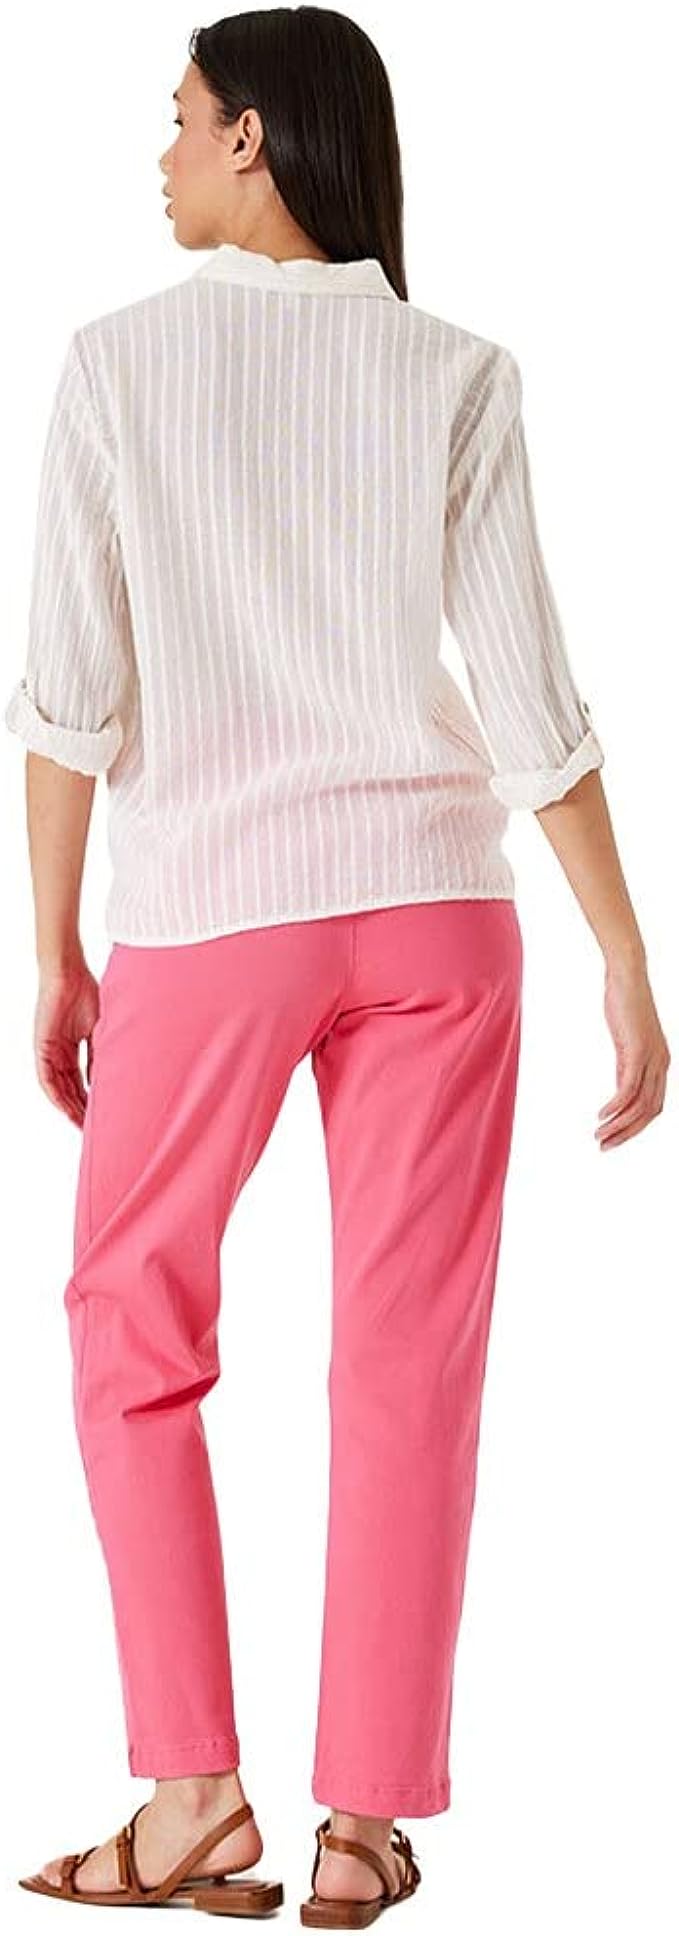 Garcia Rouge Pink Pants